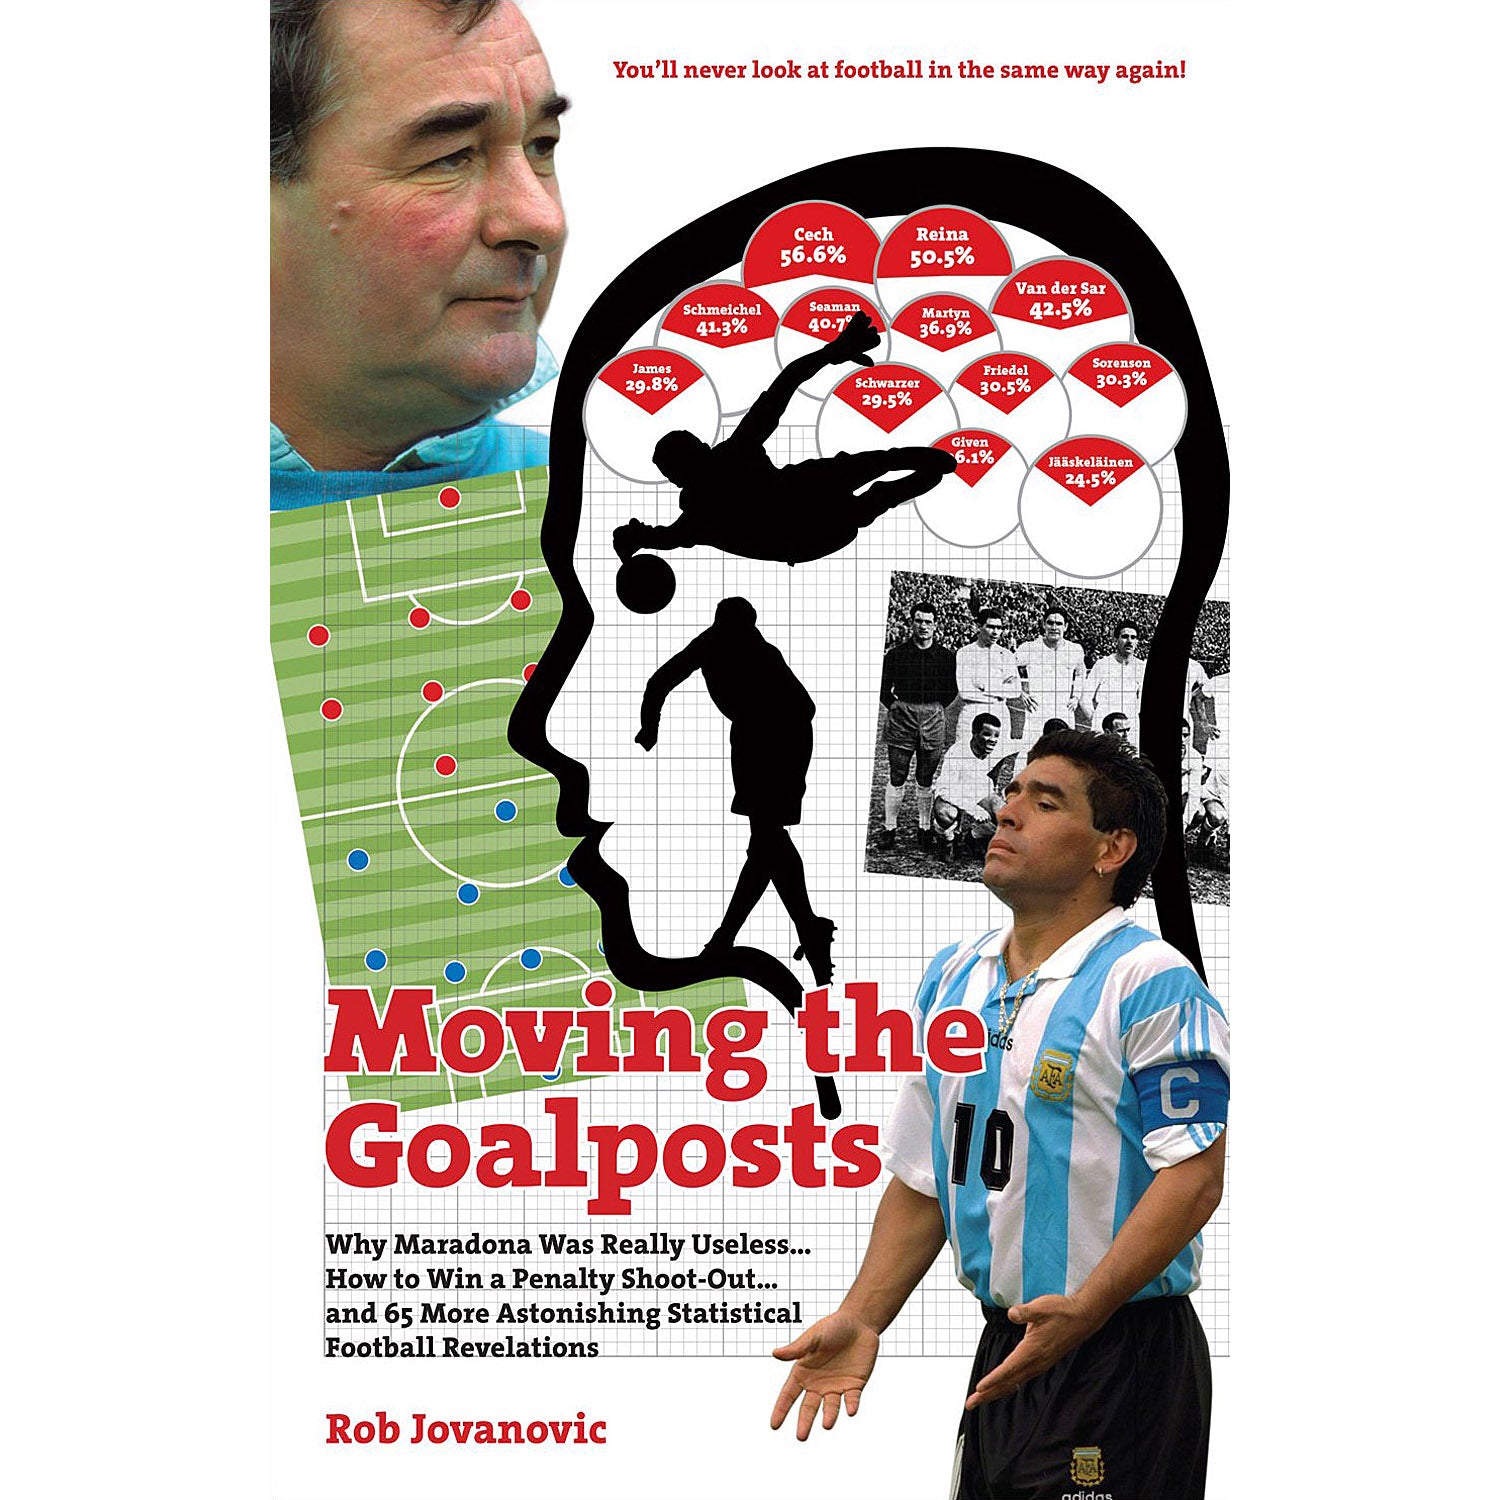 Moving the Goalposts – Astonishing Statistical Football Revelations